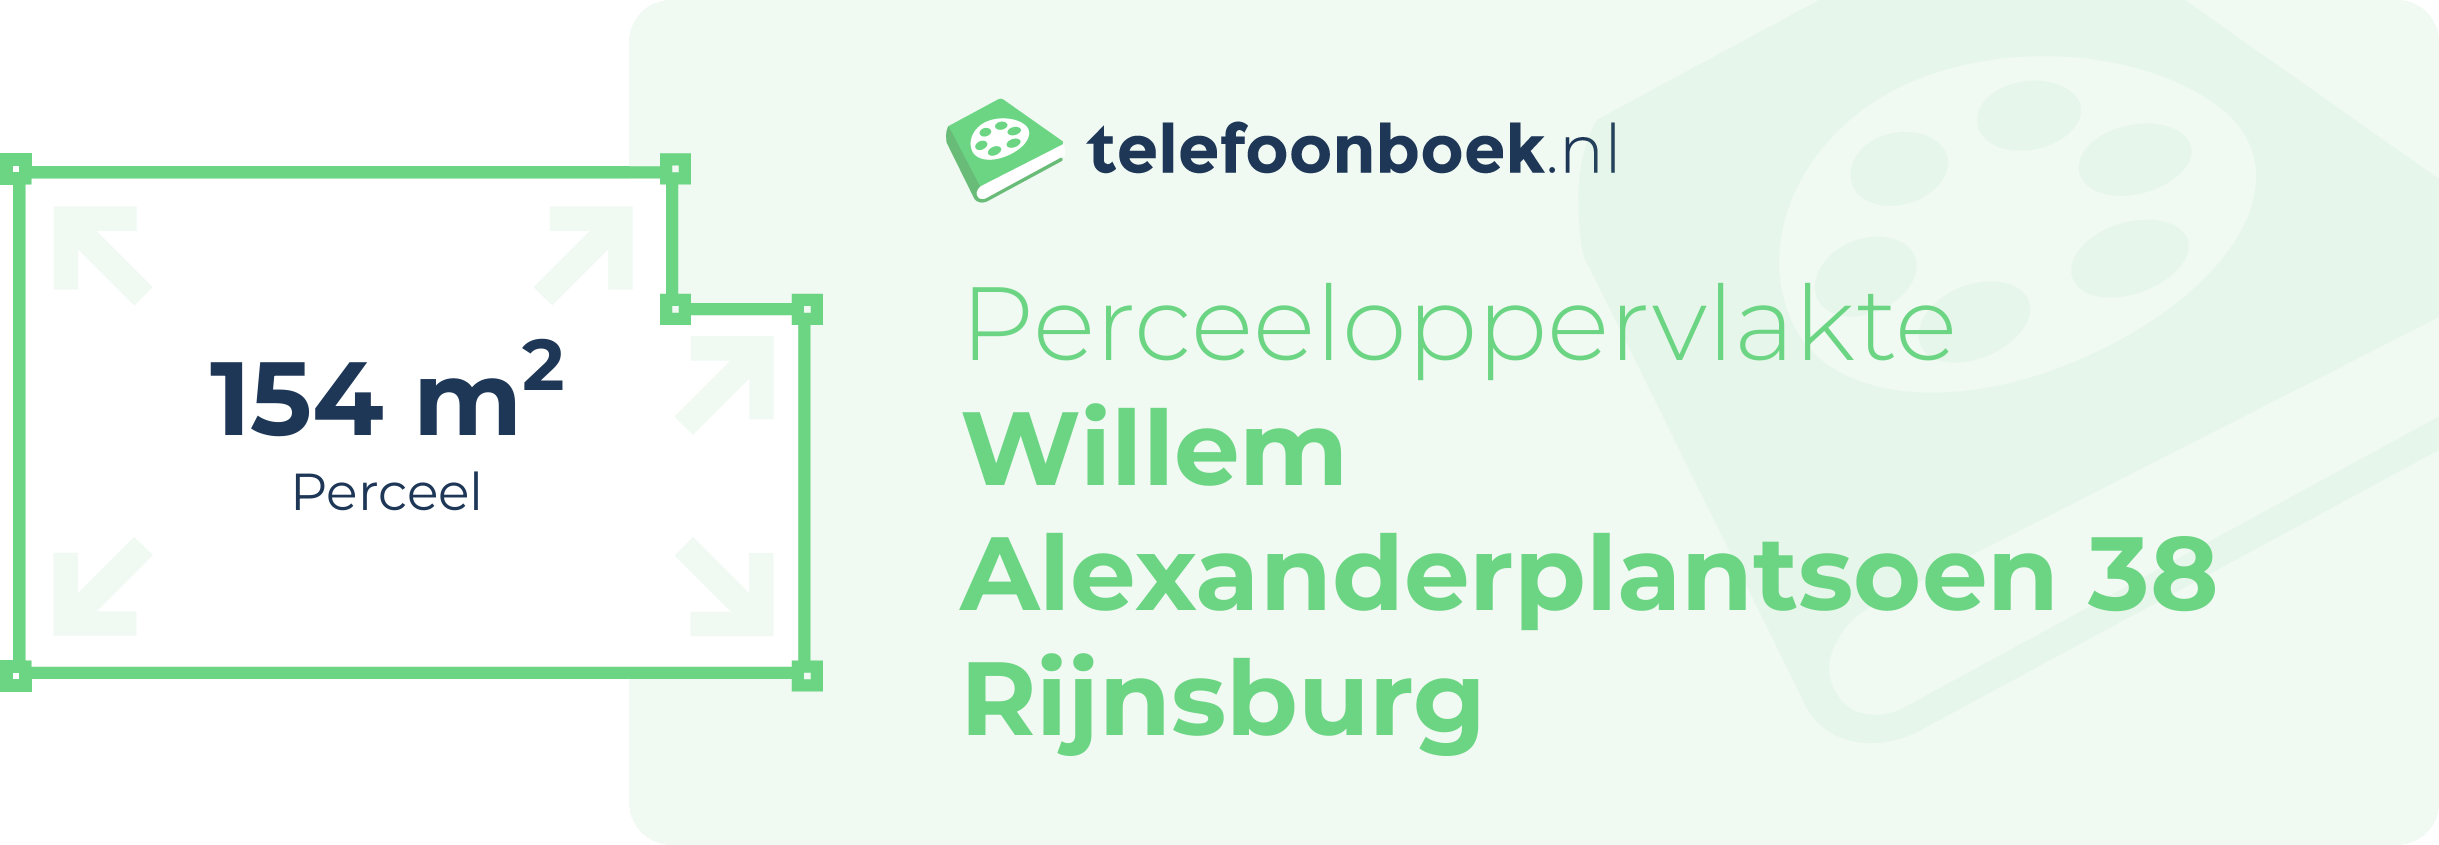 Perceeloppervlakte Willem Alexanderplantsoen 38 Rijnsburg